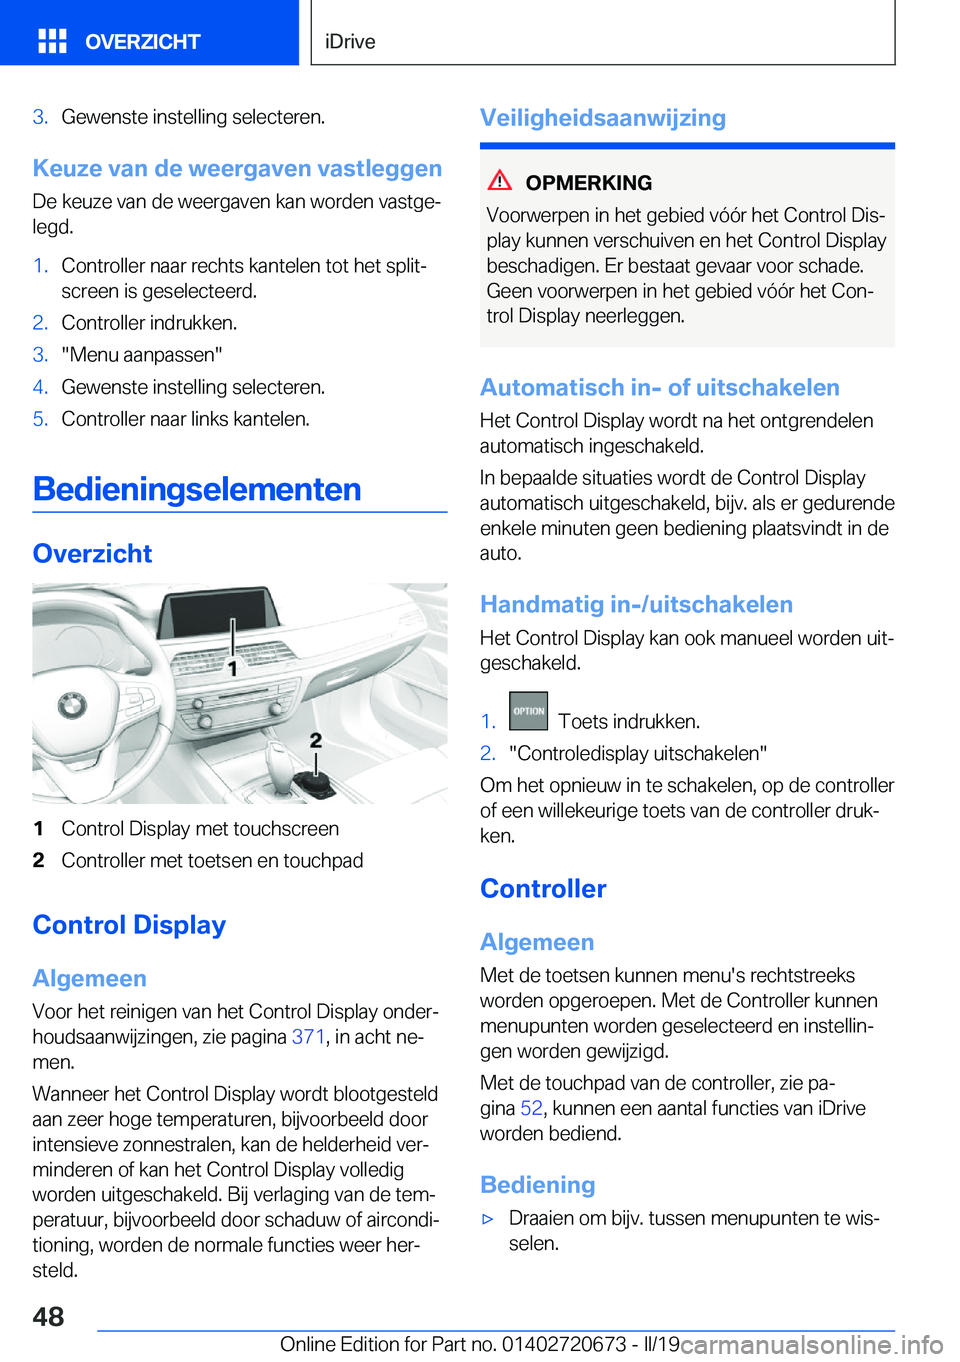 BMW M5 2019  Instructieboekjes (in Dutch) �3�.�G�e�w�e�n�s�t�e��i�n�s�t�e�l�l�i�n�g��s�e�l�e�c�t�e�r�e�n�.
�K�e�u�z�e��v�a�n��d�e��w�e�e�r�g�a�v�e�n��v�a�s�t�l�e�g�g�e�n�D�e��k�e�u�z�e��v�a�n��d�e��w�e�e�r�g�a�v�e�n��k�a�n��w�o�r�